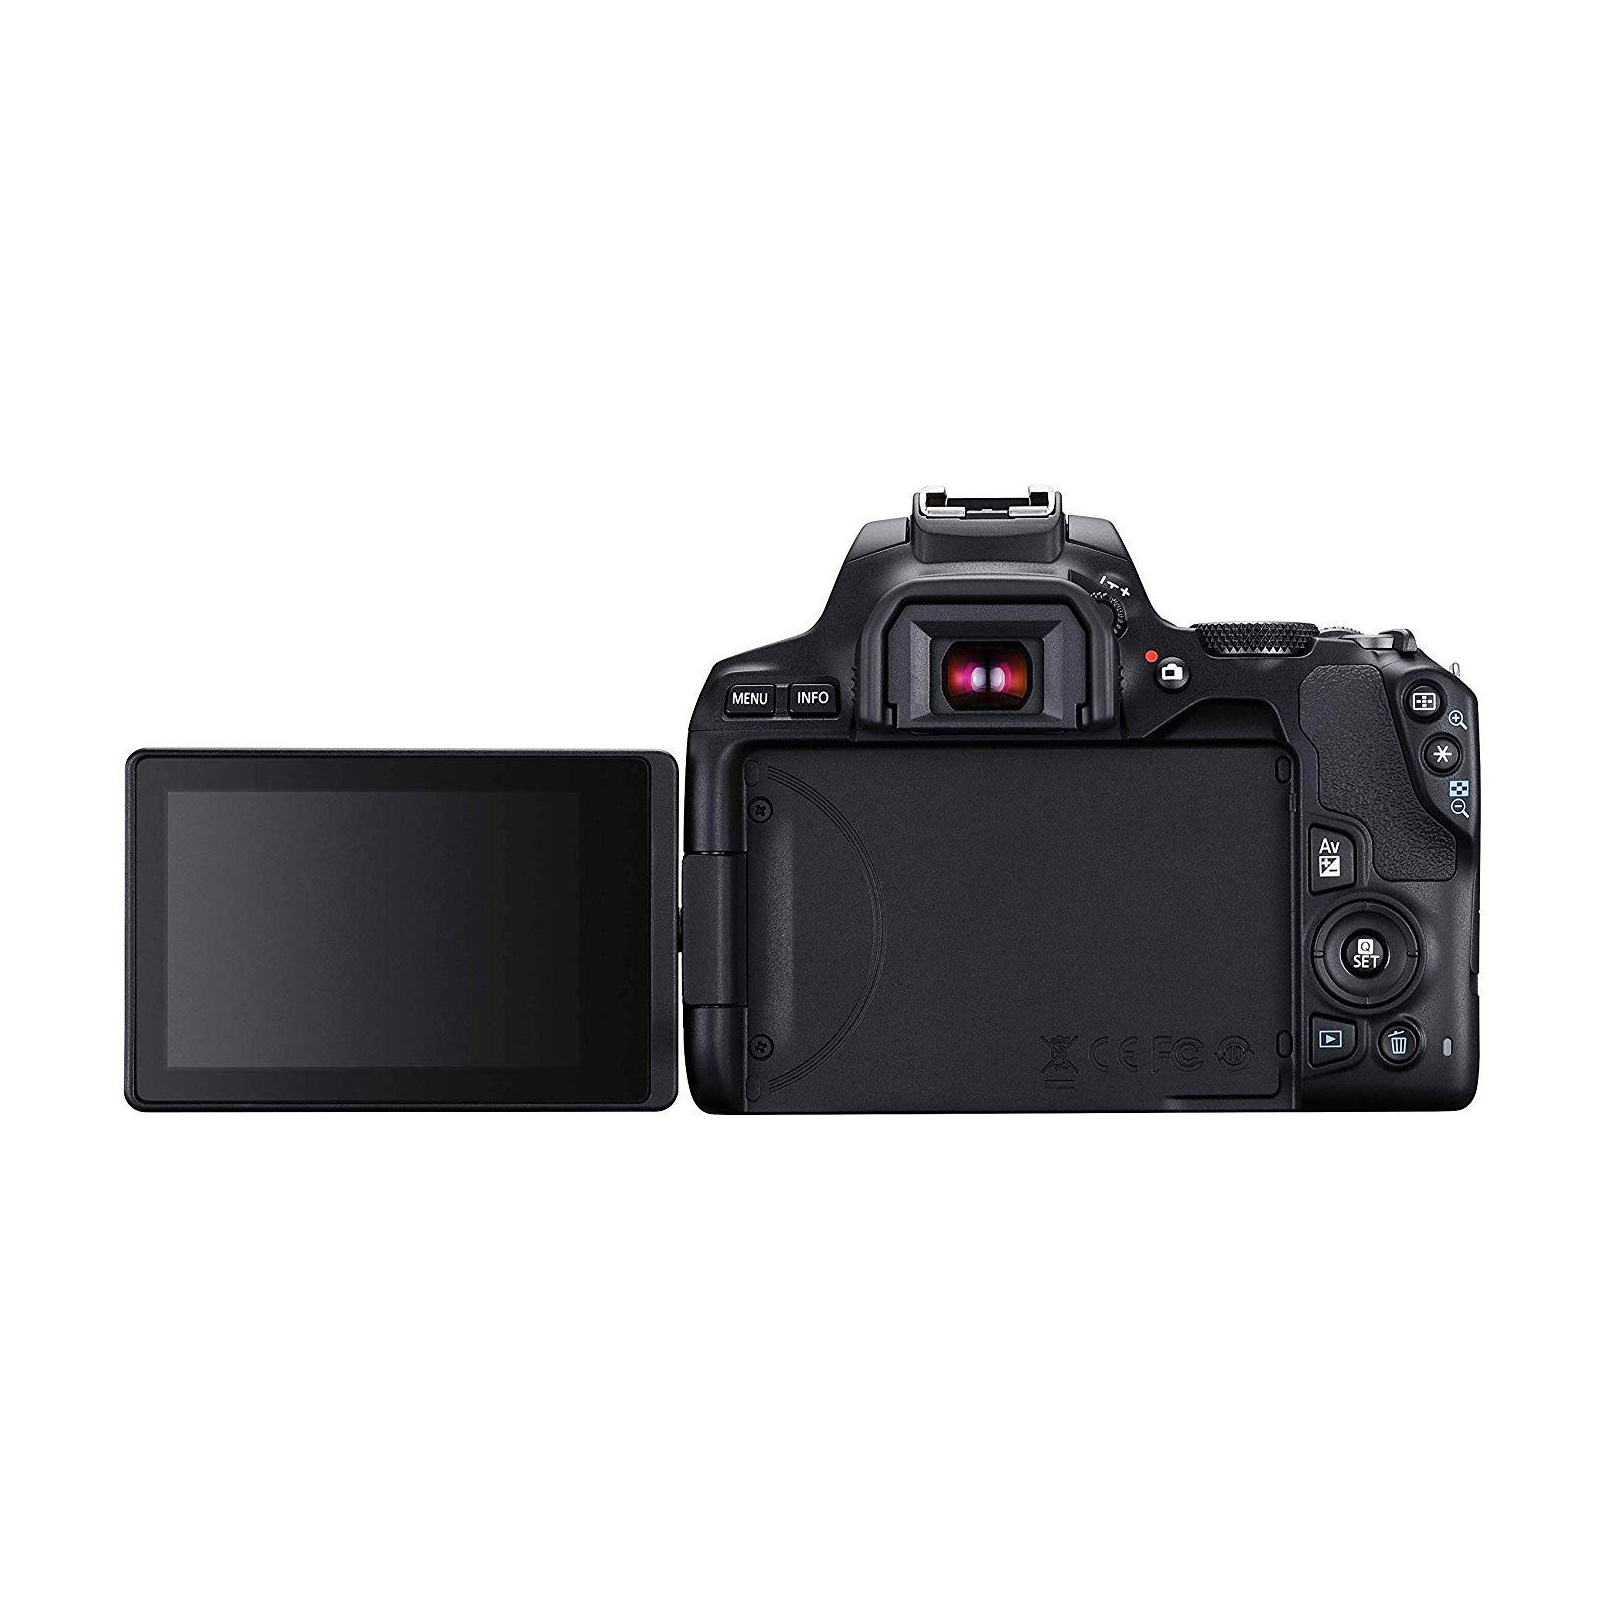 Цифровой фотоаппарат Canon EOS 250D 18-55 DC III Black kit (3454C009) изображение 8